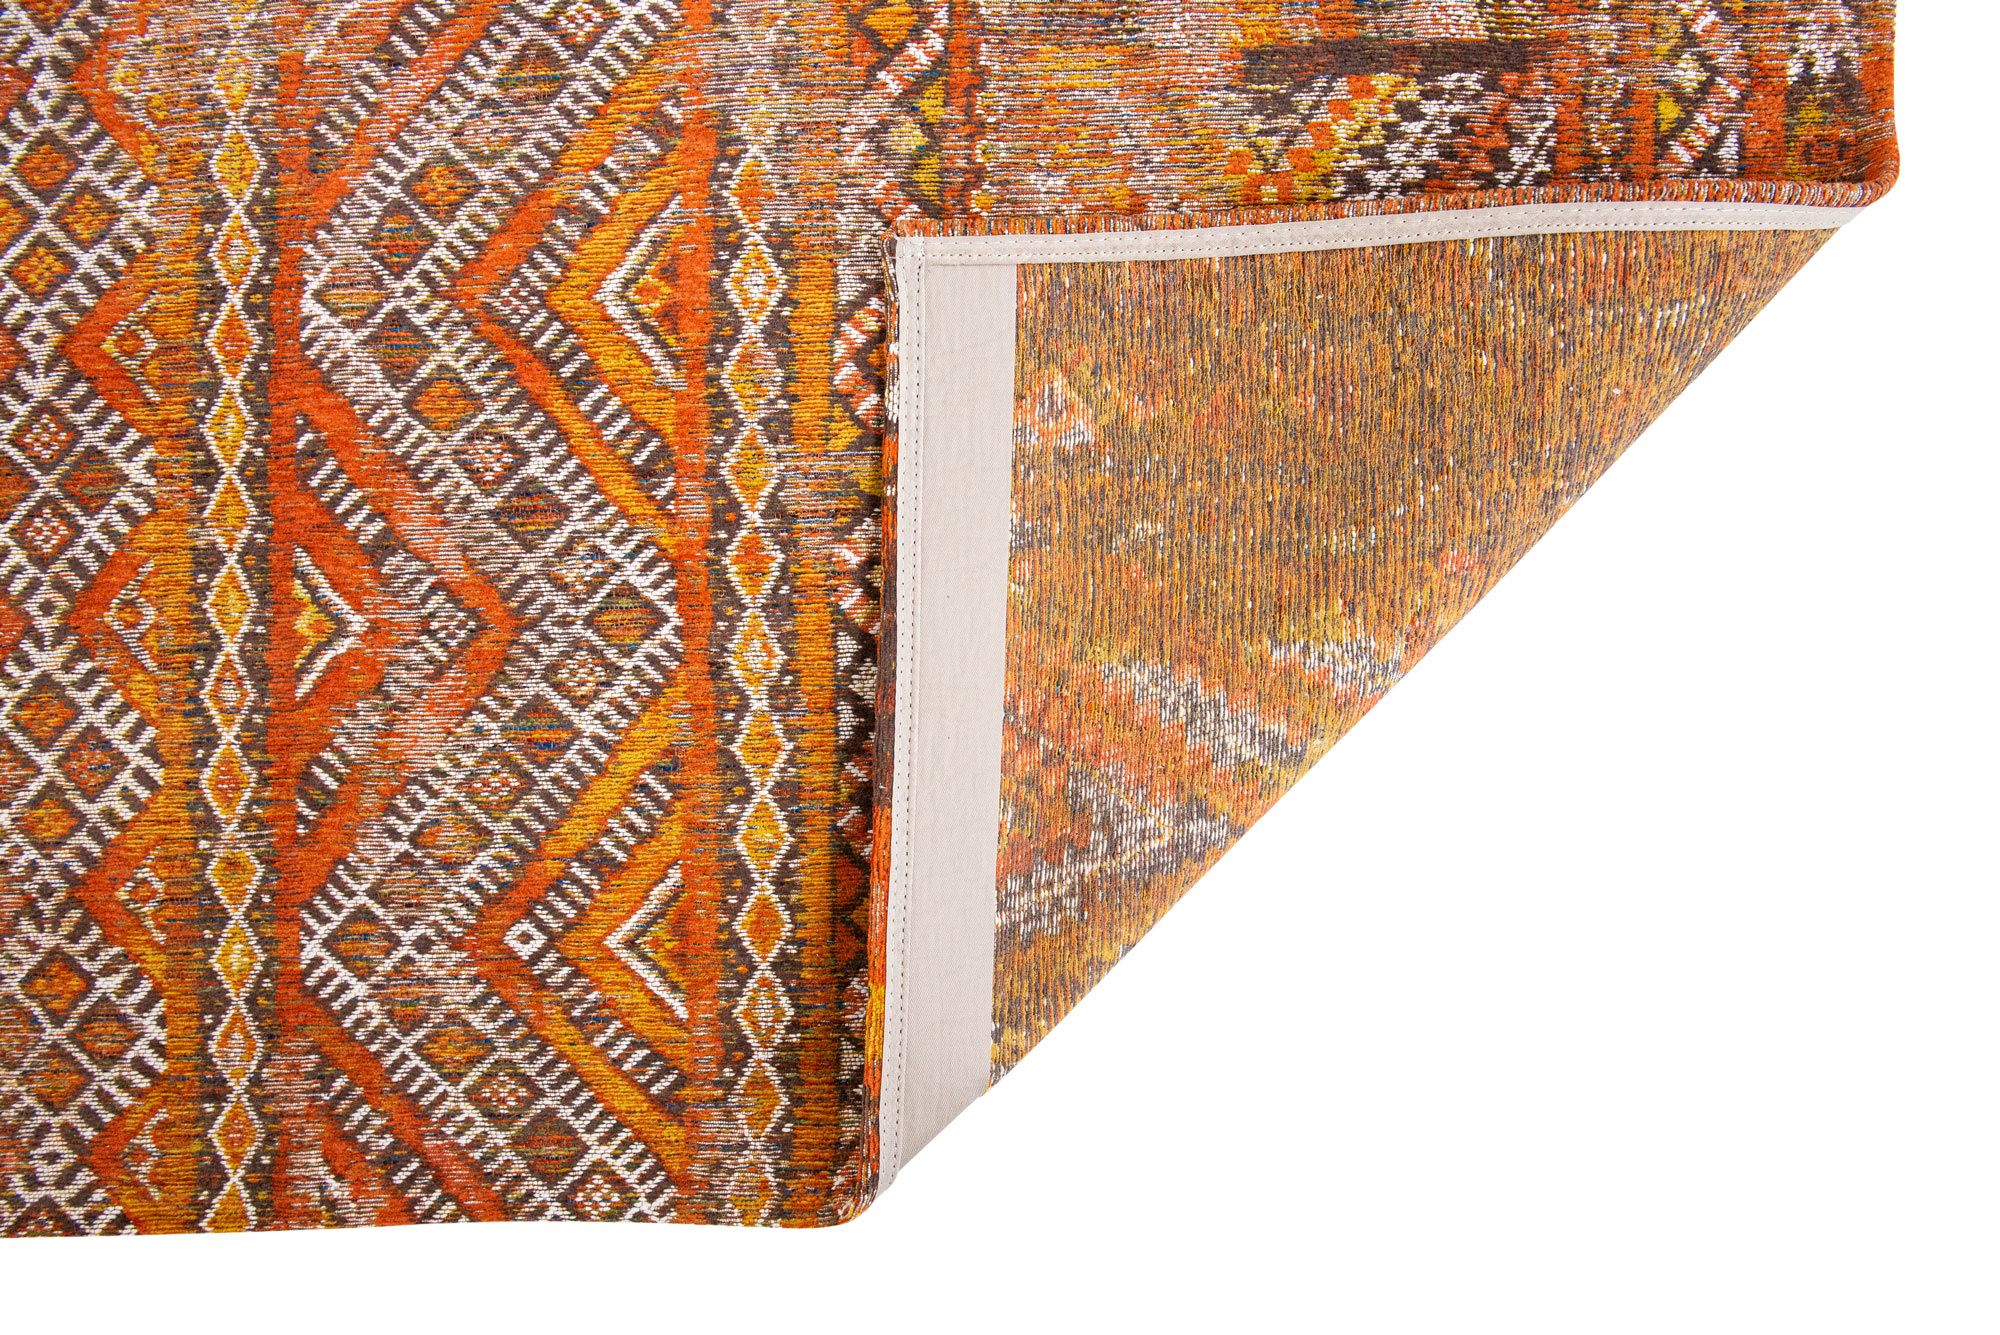 Antiquarian Flatwoven Orange Rug ☞ Size: 4' 7" x 6' 7" (140 x 200 cm)